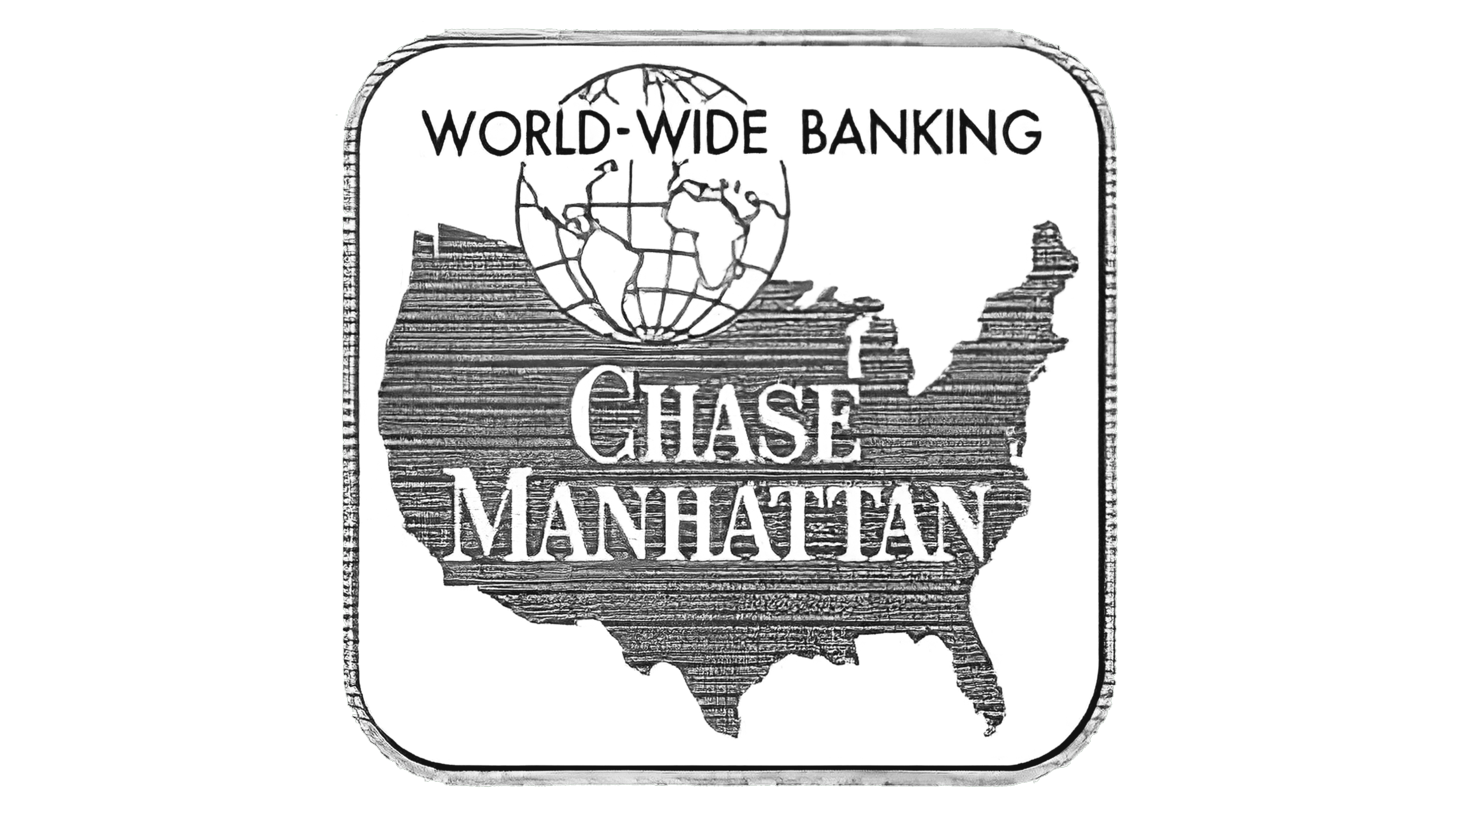 Chase manhattan world wide banking sign 1955 1961